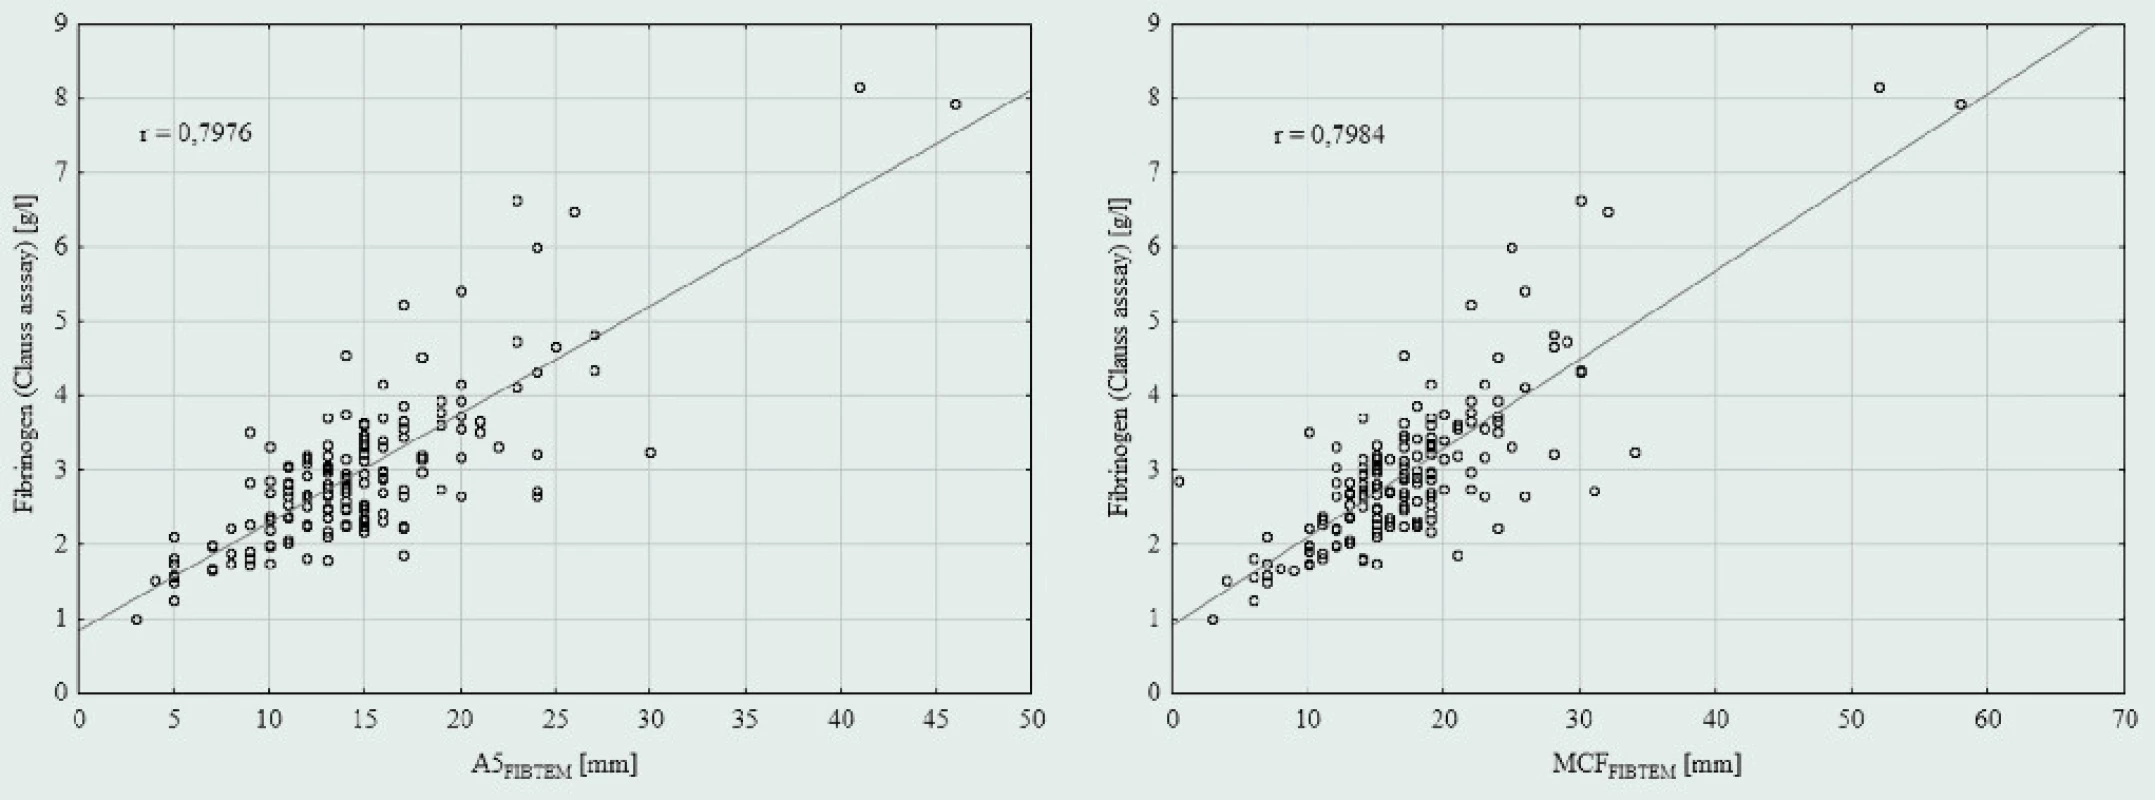 Korelace hladiny fibrinogenu s parametry FIBTEM: Korelace hladiny fibrinogenu stanovené Claussovou metodou s parametrem A5FIBTEM (A)
a parametrem MCFFIBTEM (B), obě statisticky významné s hodnotou p < 0,001.